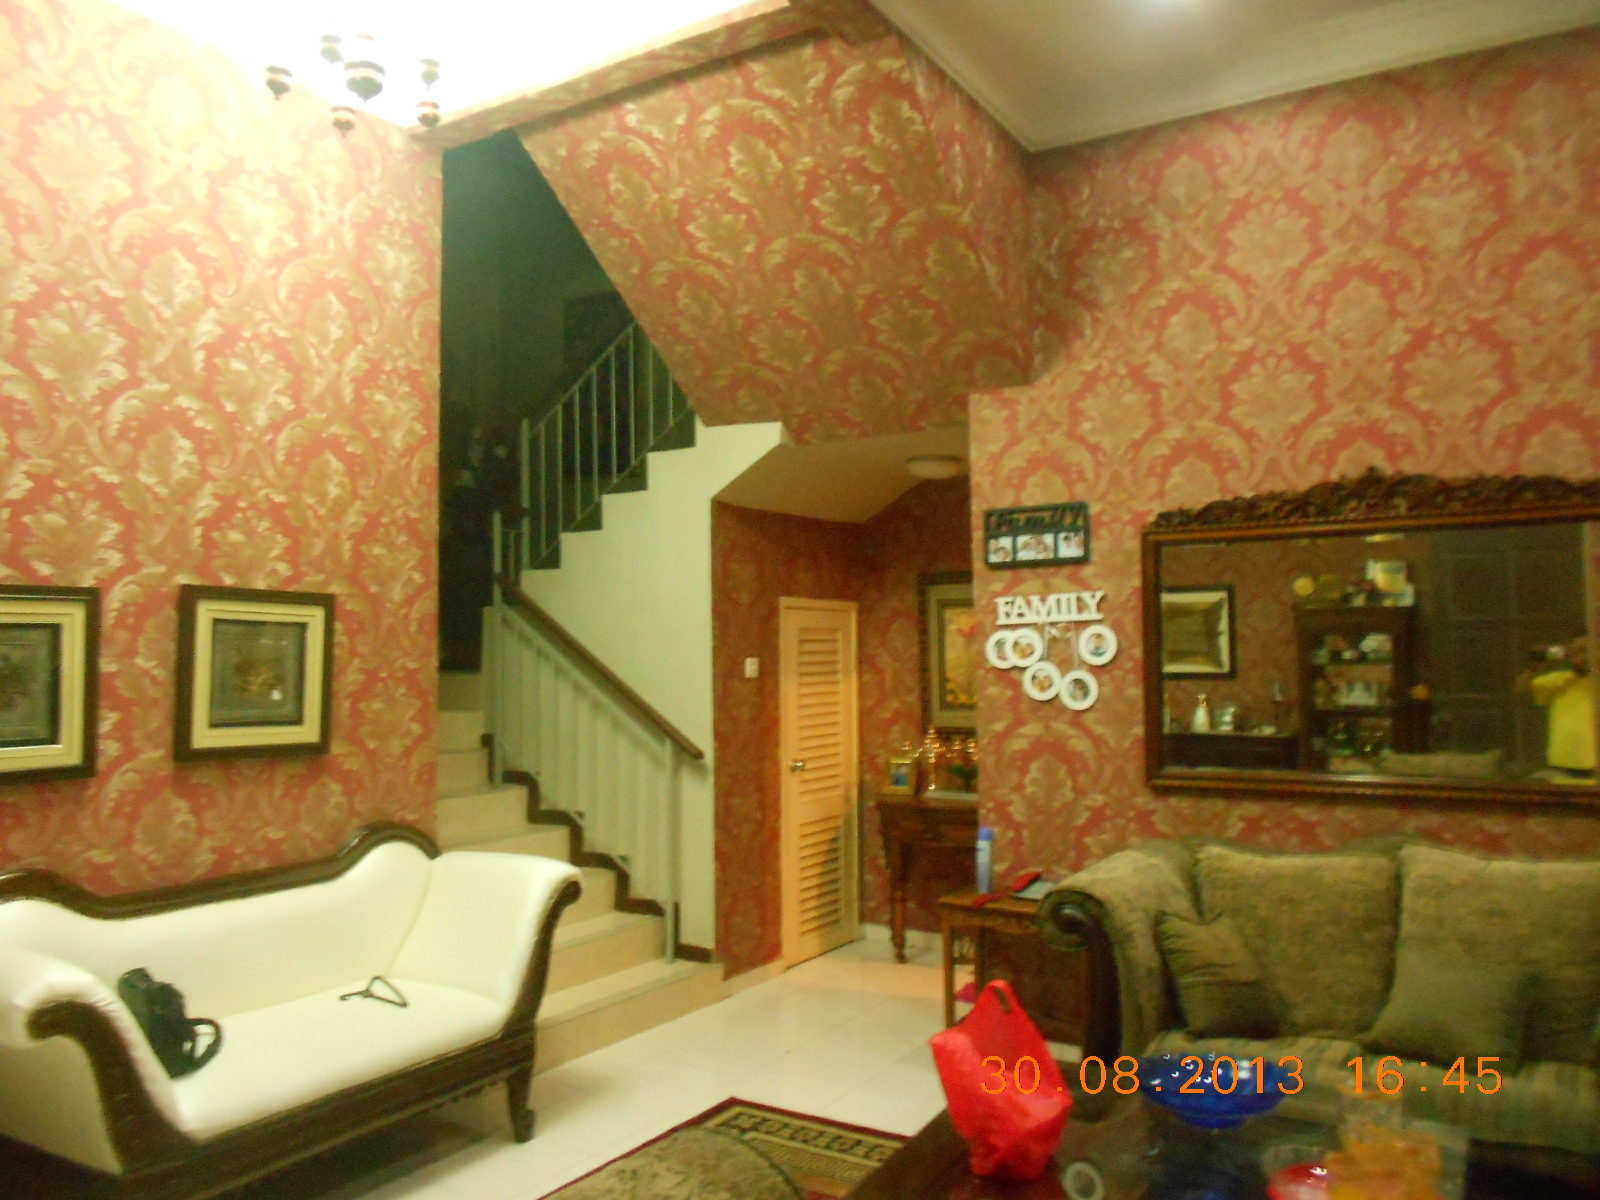 wallpaper rumah mewah,room,property,interior design,living room,wall